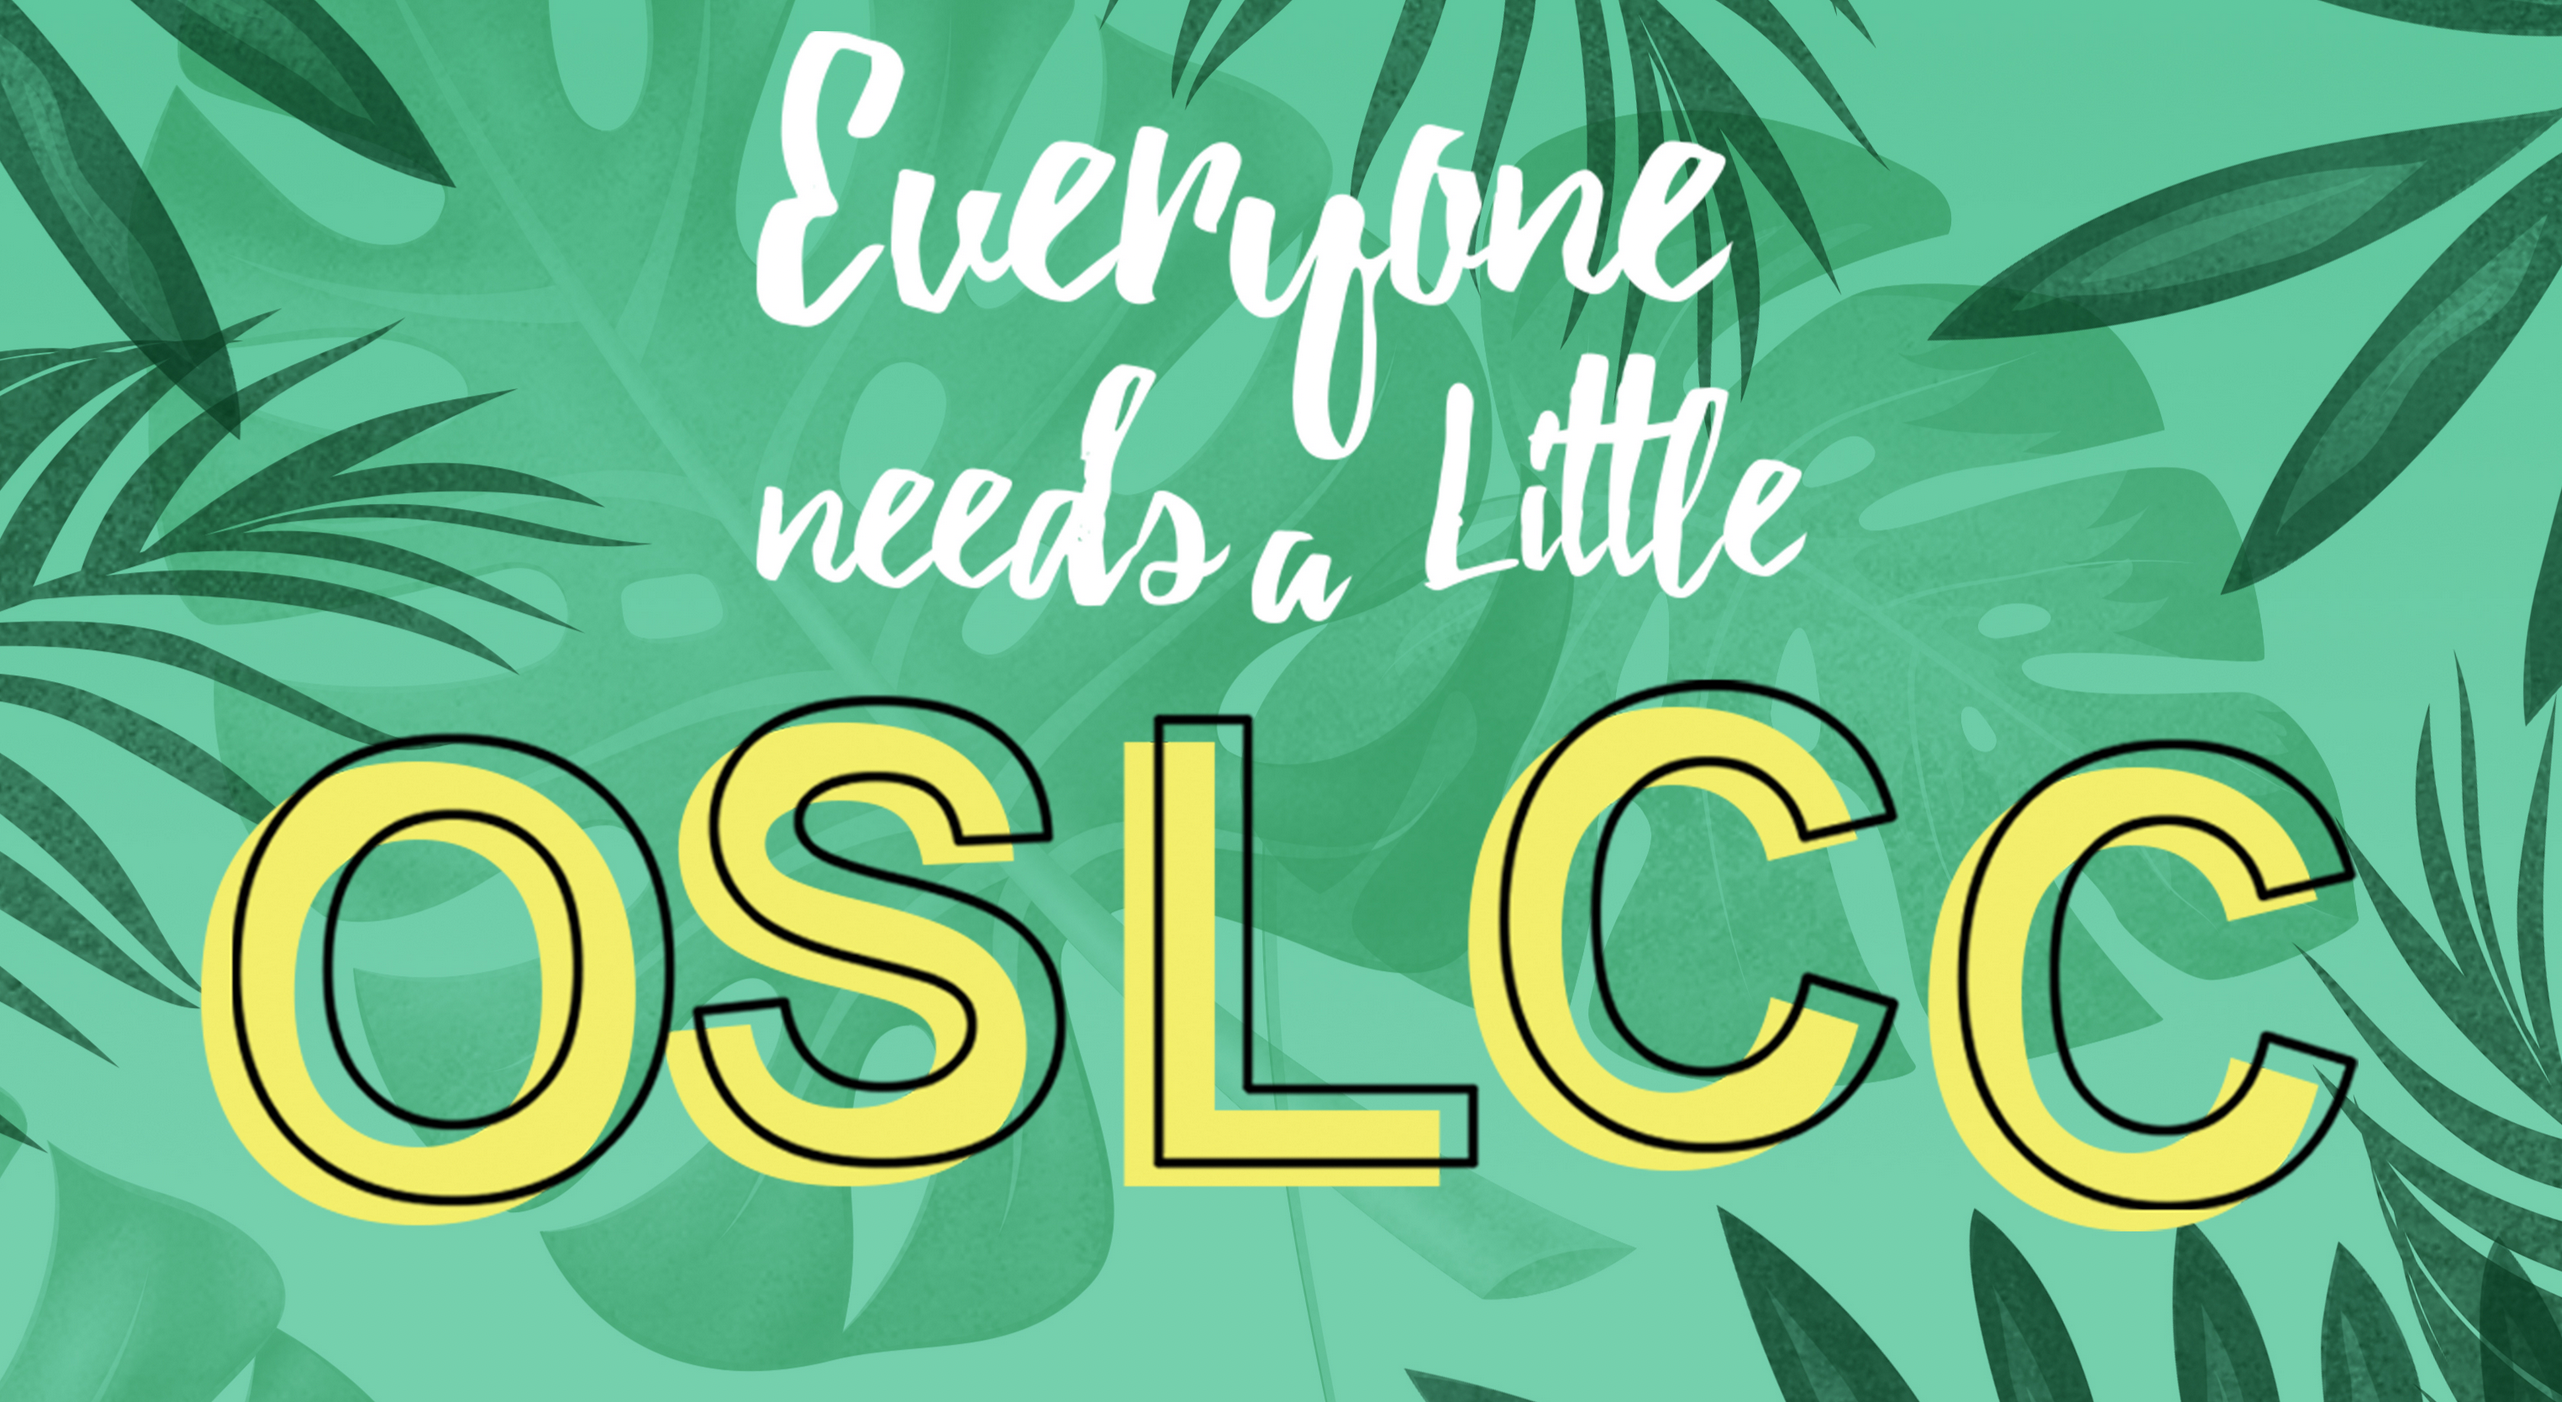 Everyone needs a little OSLCC logo